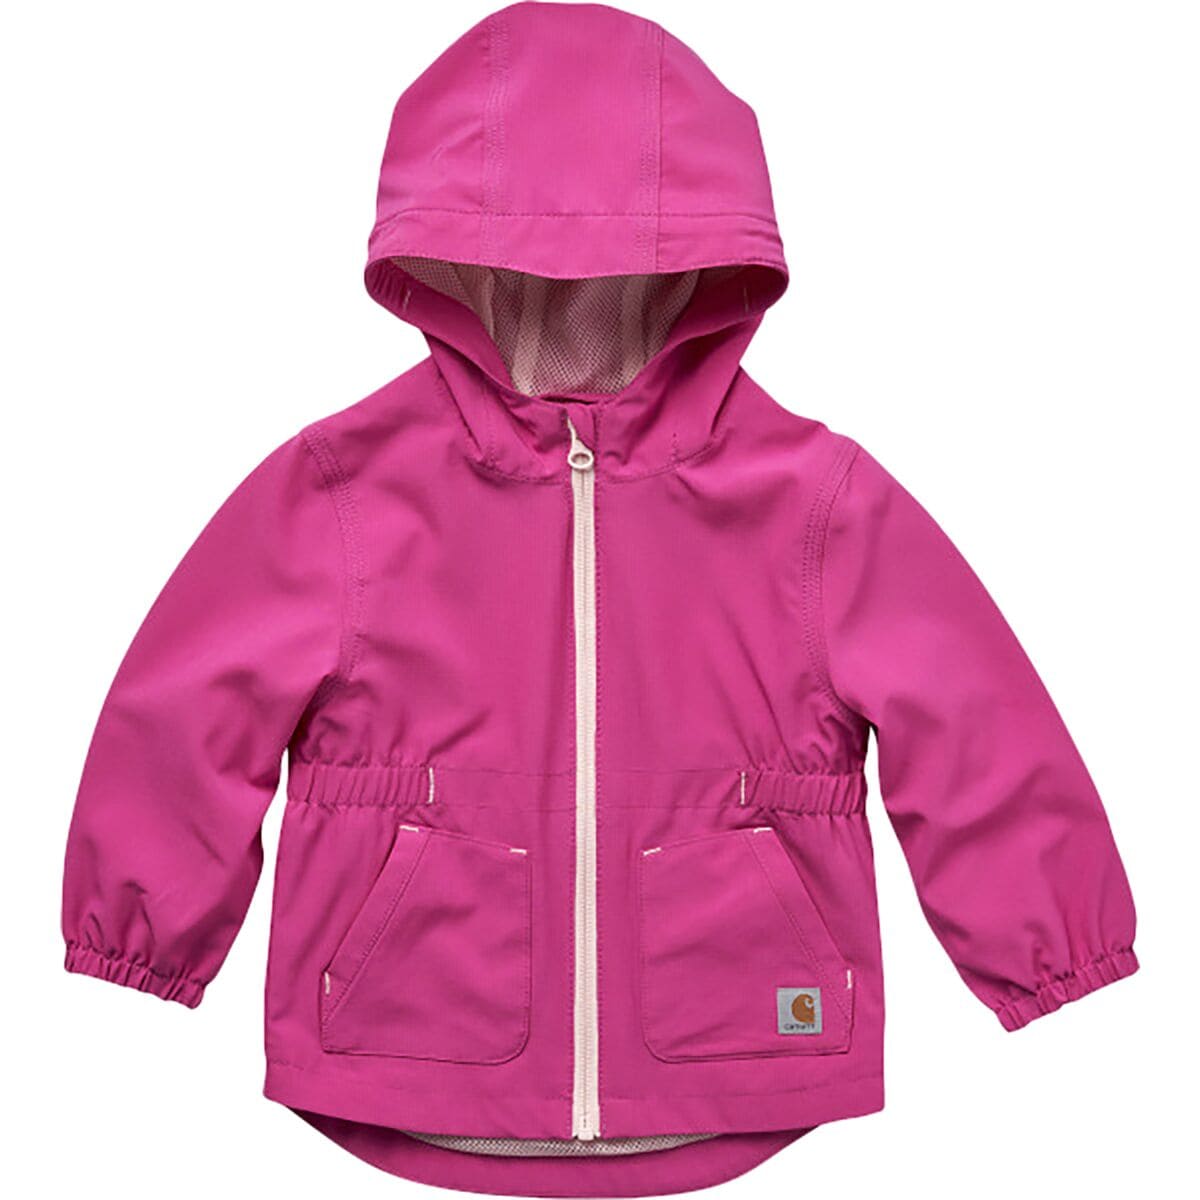 Carhartt Rugged Flex Ripstop Jacket - Infant Girls'